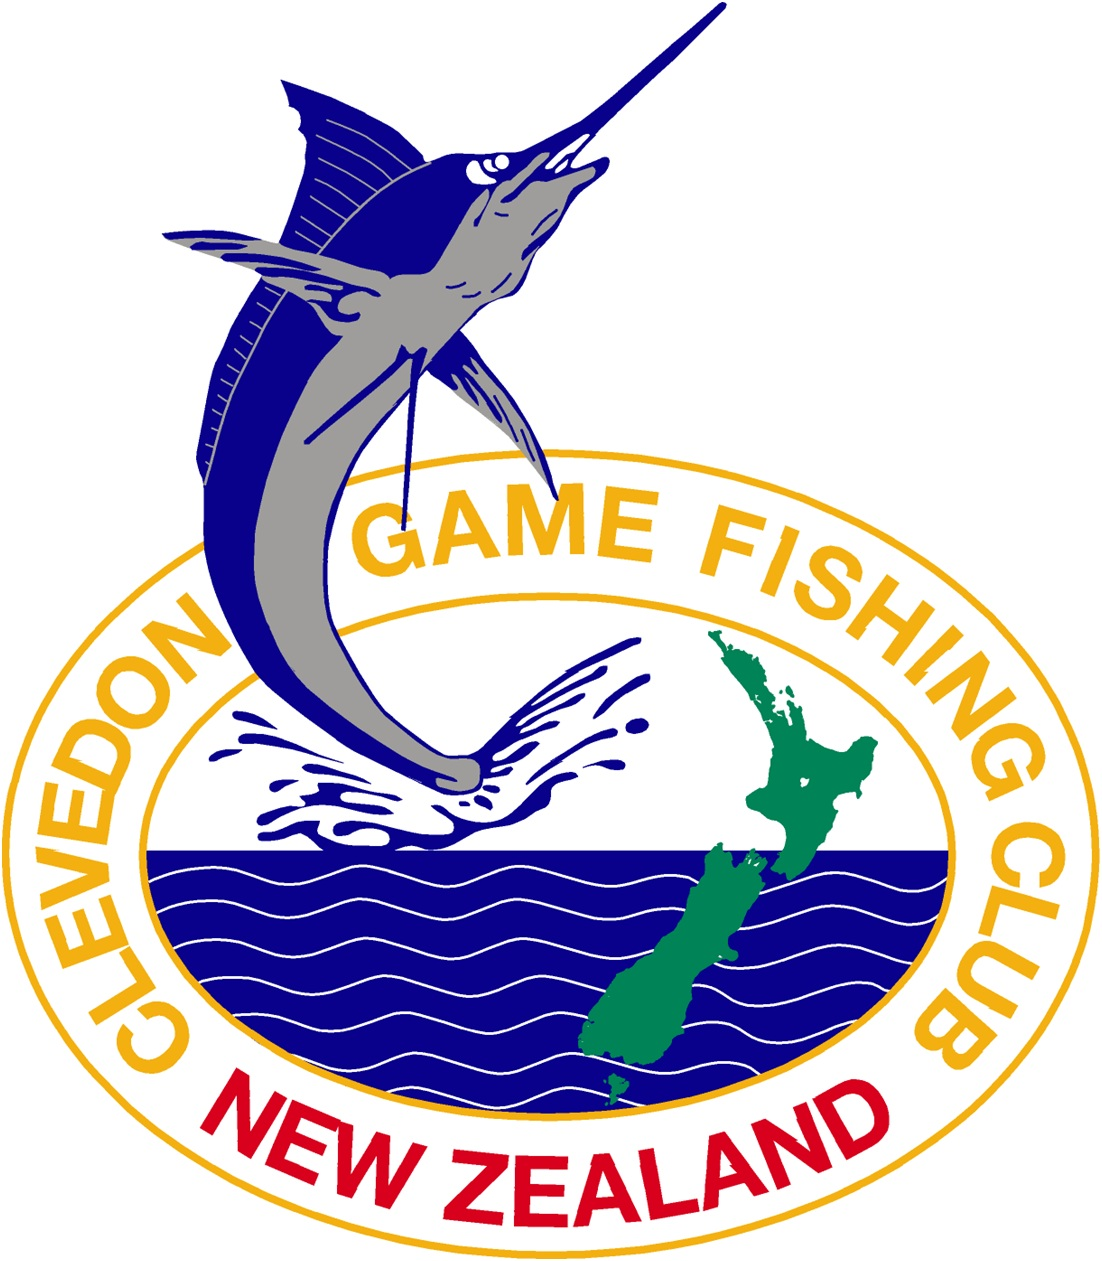 Clevedon Game Fishing Club - NZSFC & LegaSea